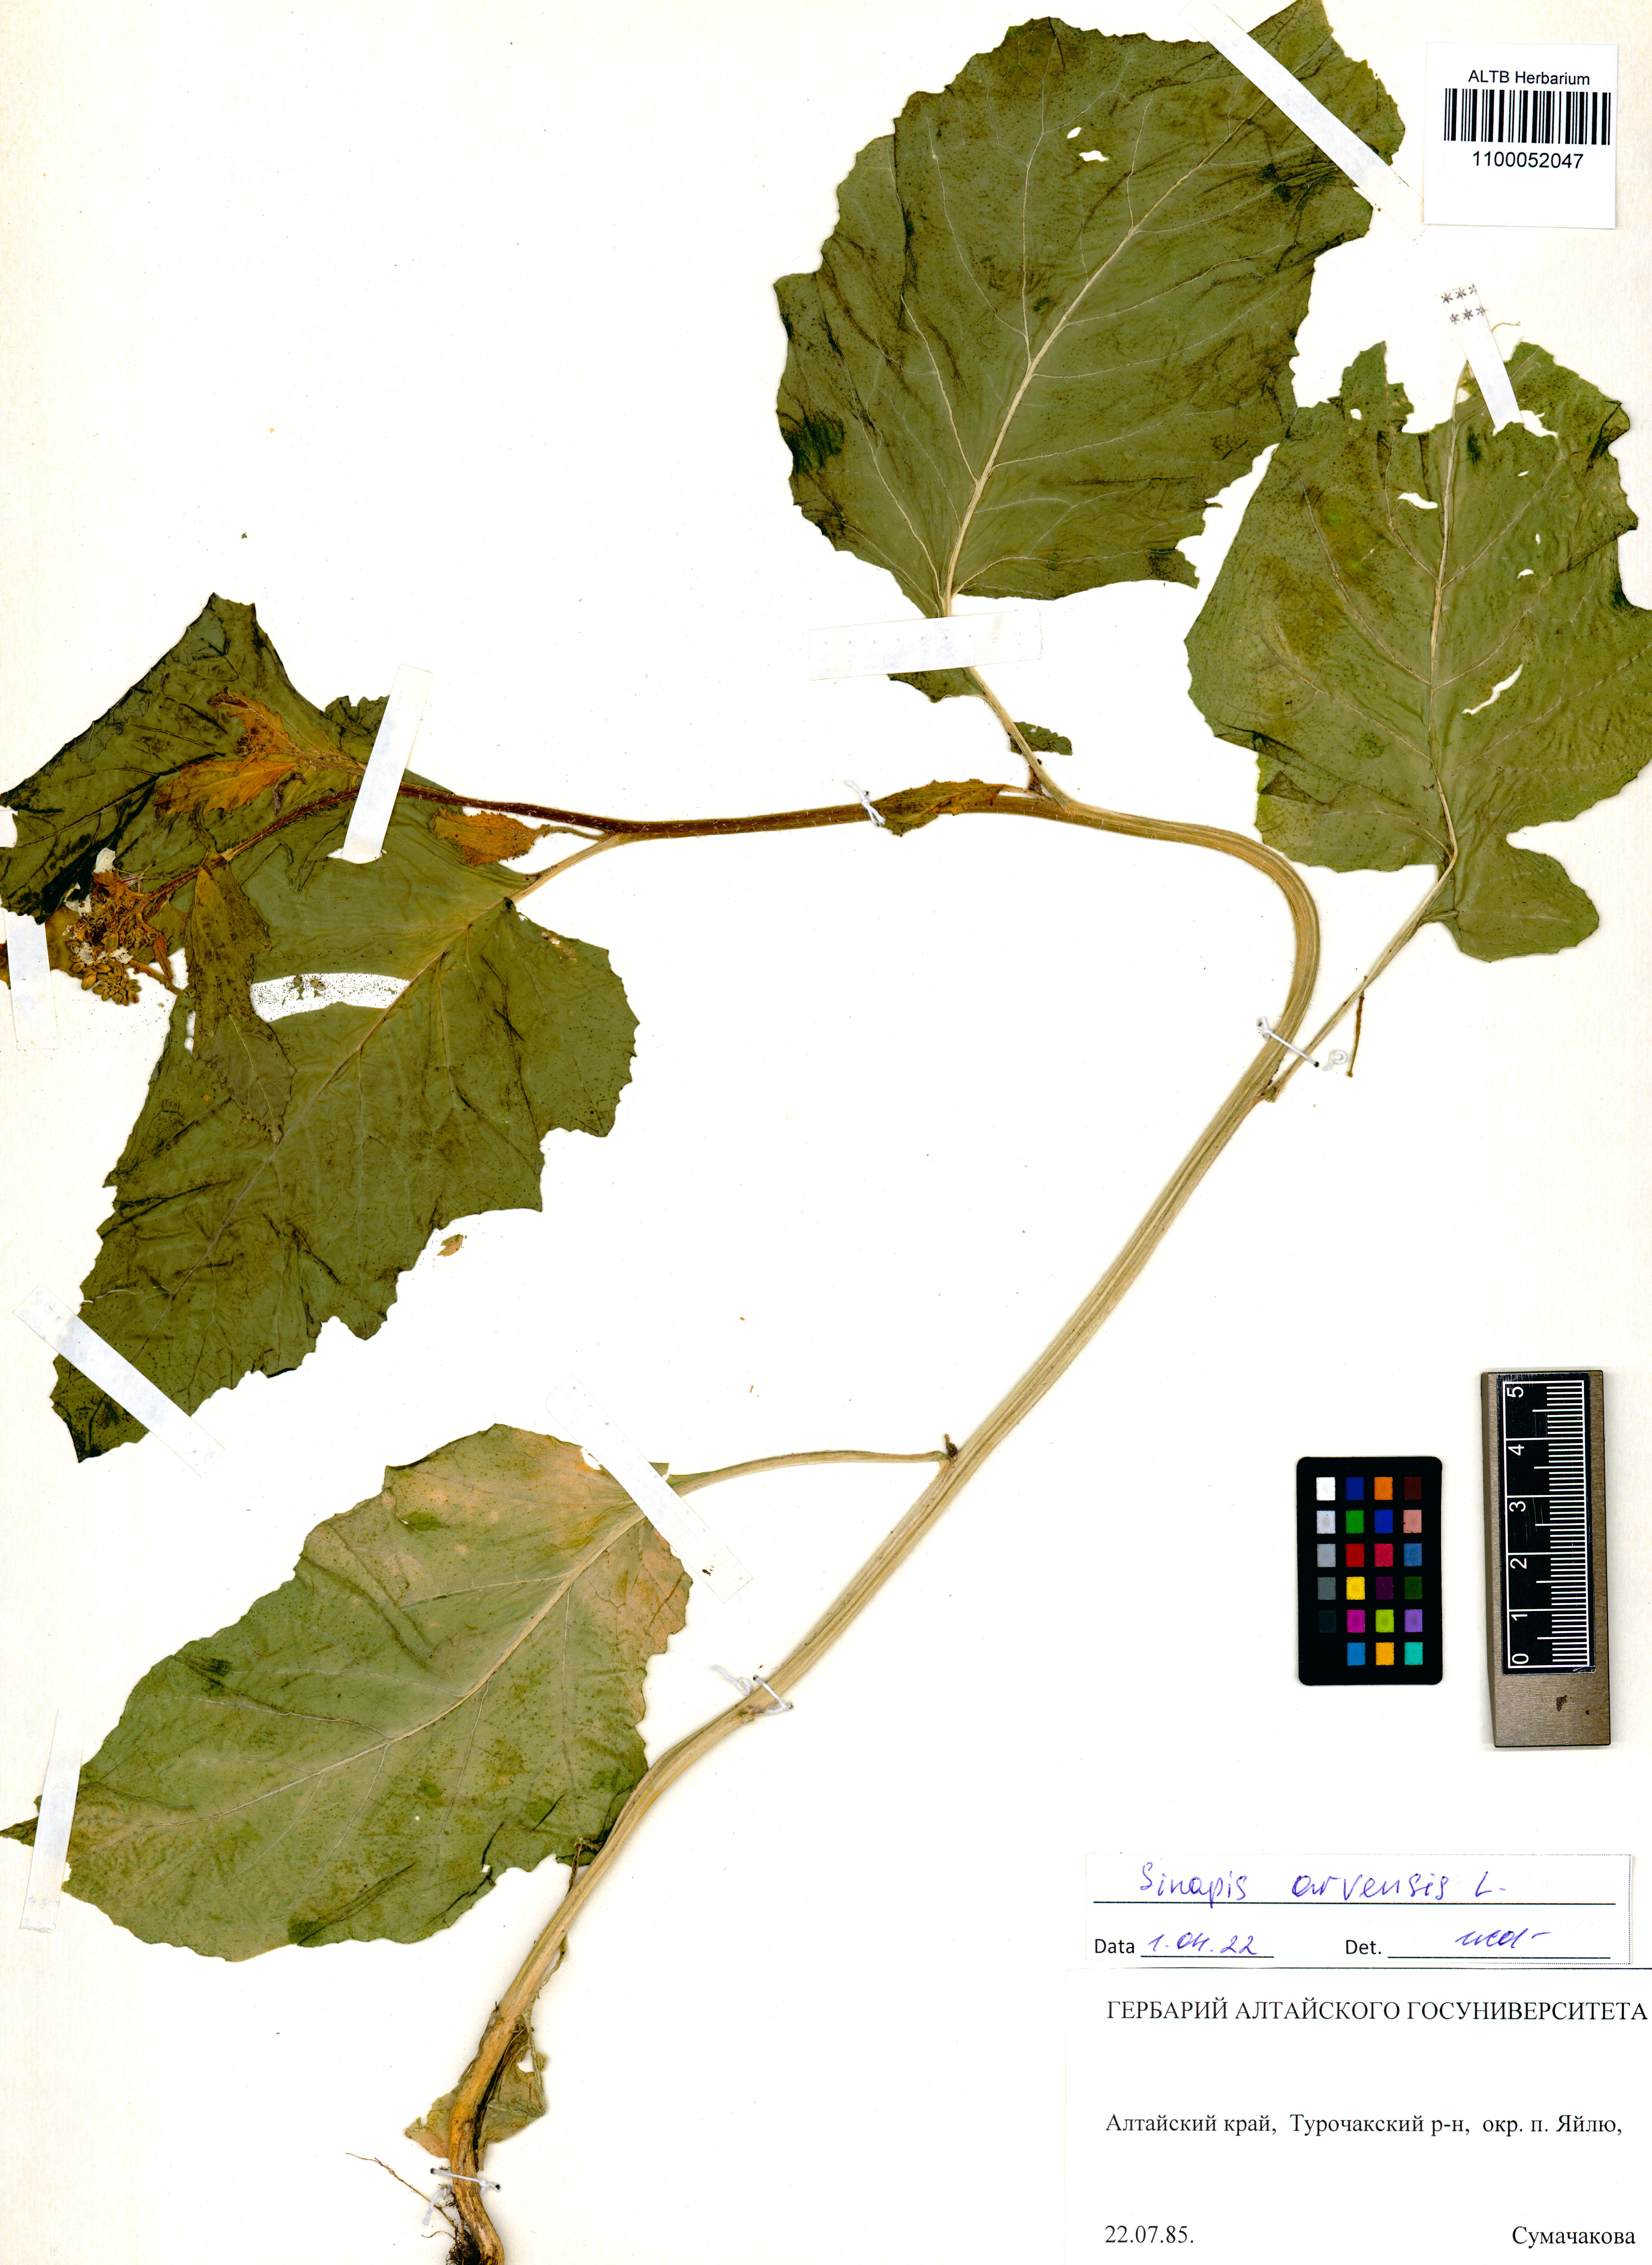 Sinapis arvensis L.